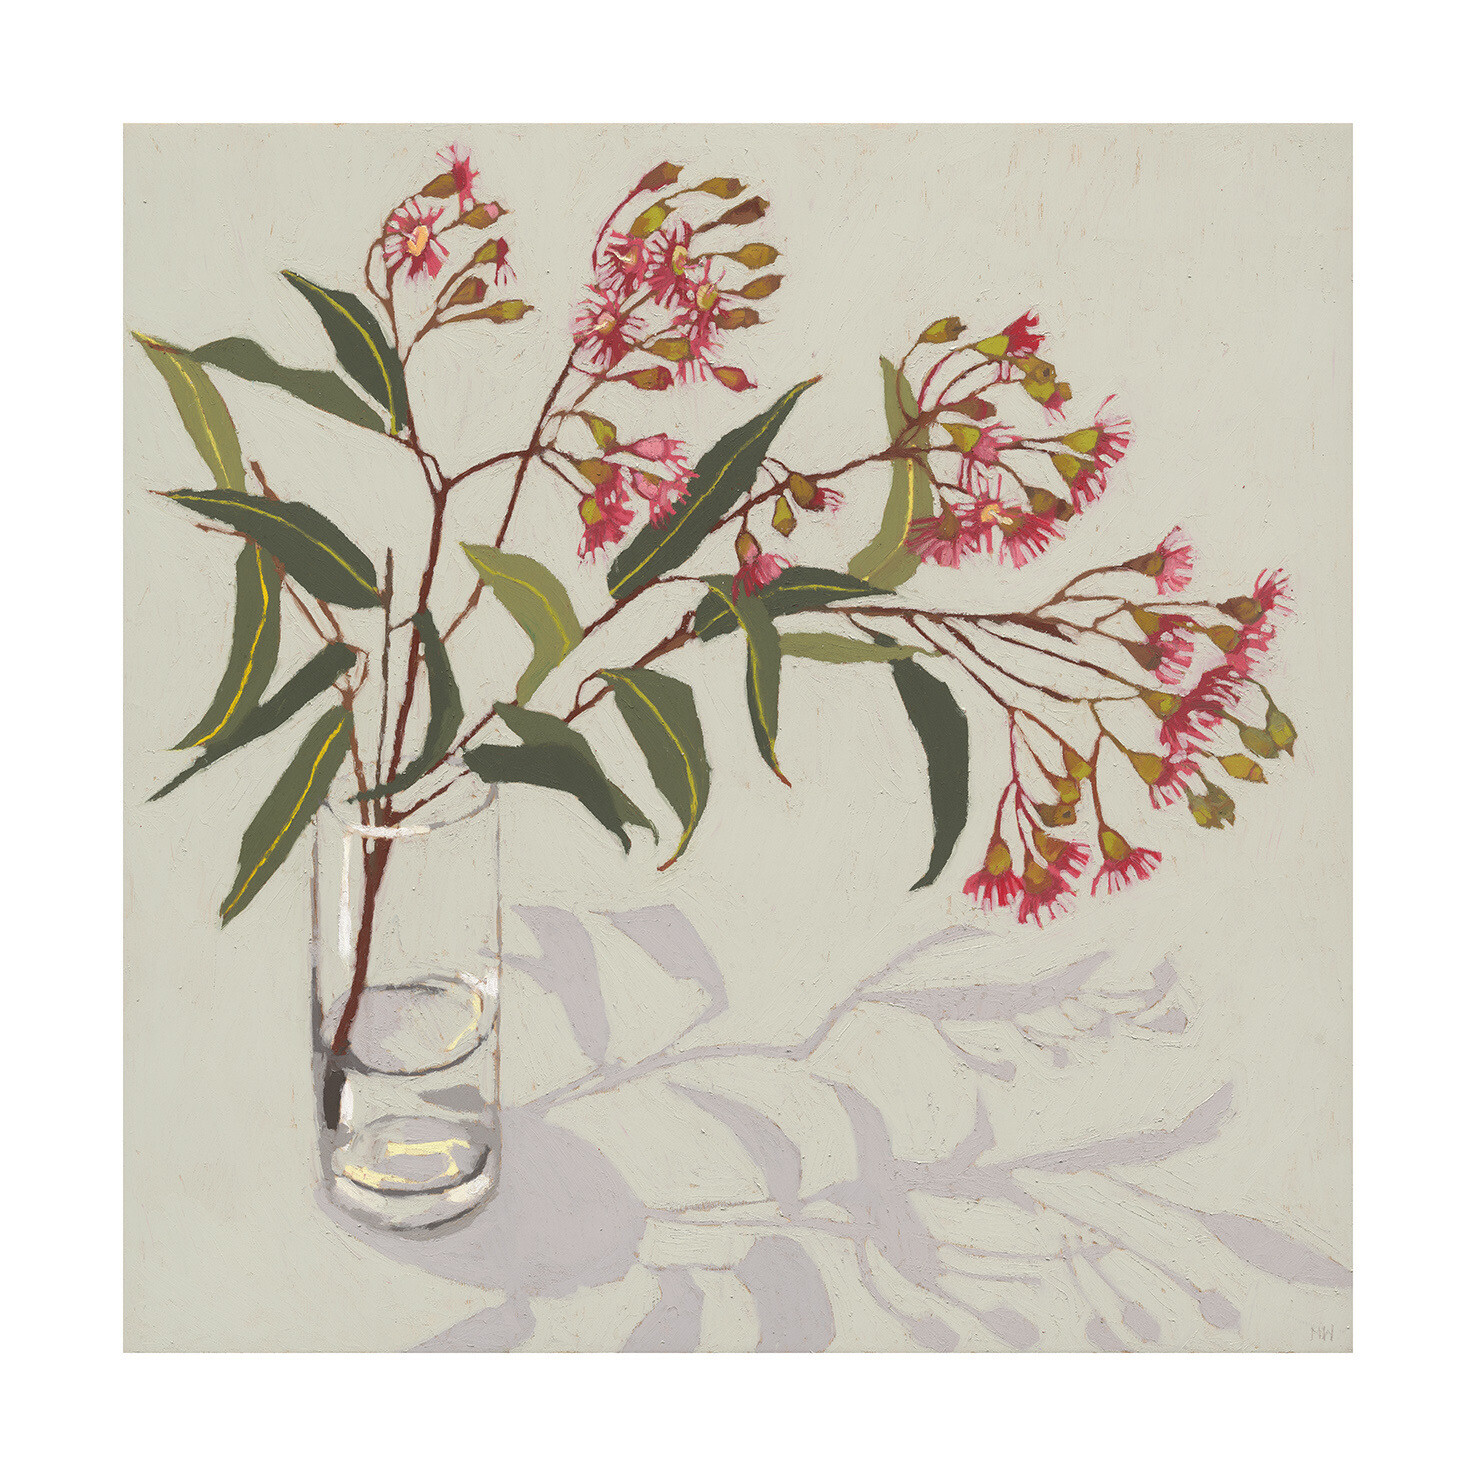 Limited Edition Fine Art Print “Flowering Gum” 60cm X 60cm 310gsm photo rag paper